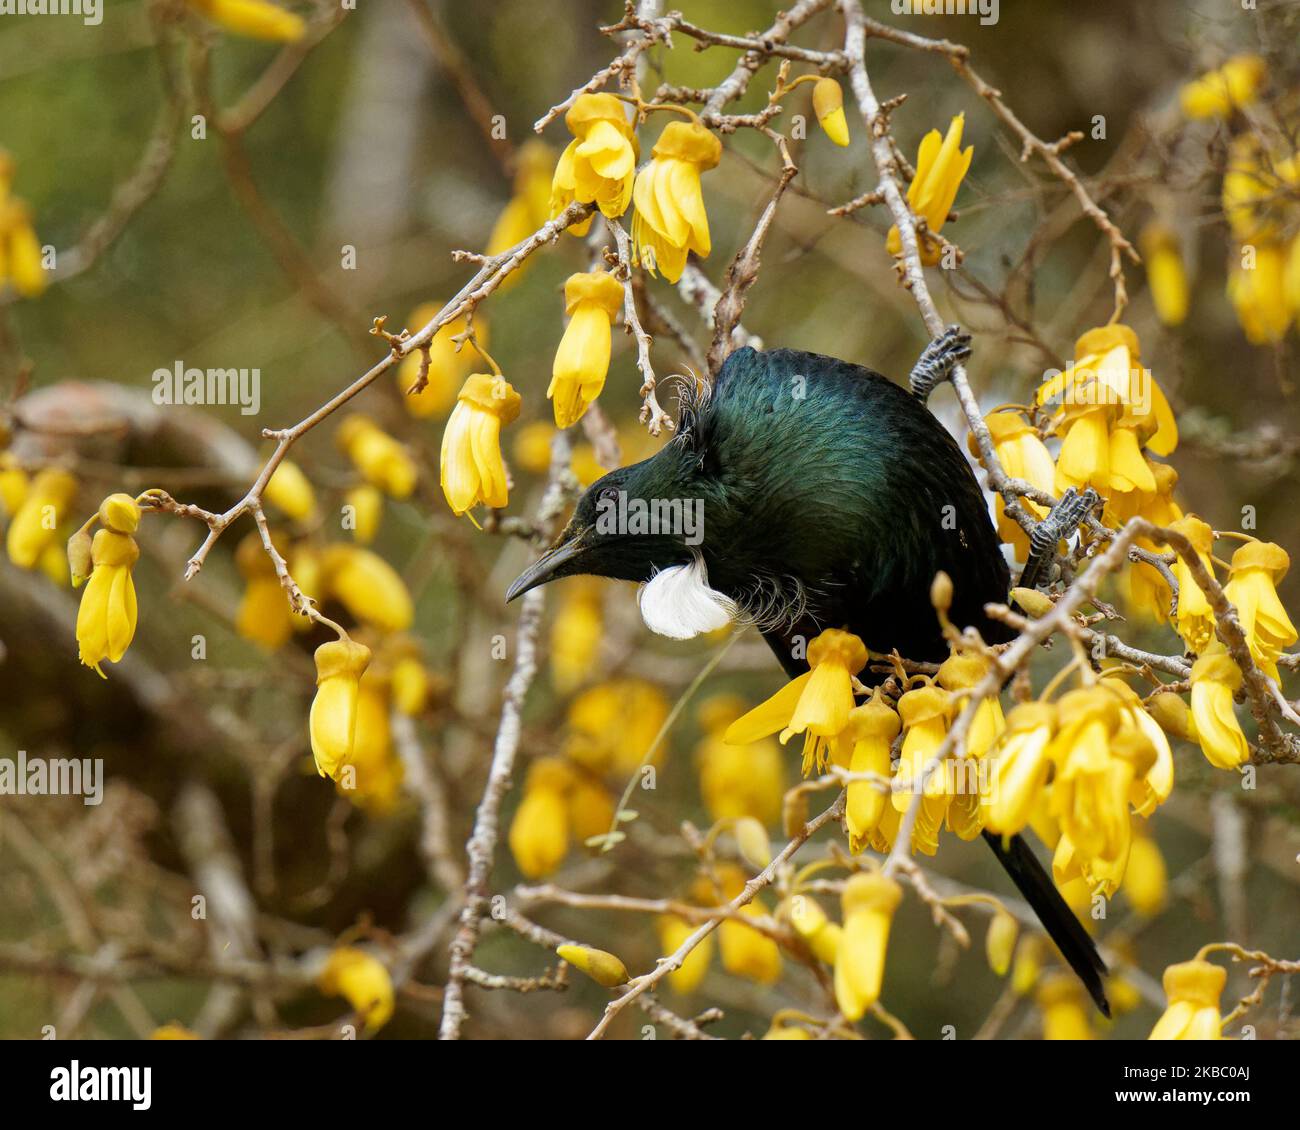 Tui, endemic passerine bird of Aotearoa / New Zealand, feeding on kowhai tree flower nectar. The flower stamen depositing yellow pollen on its head. Stock Photo